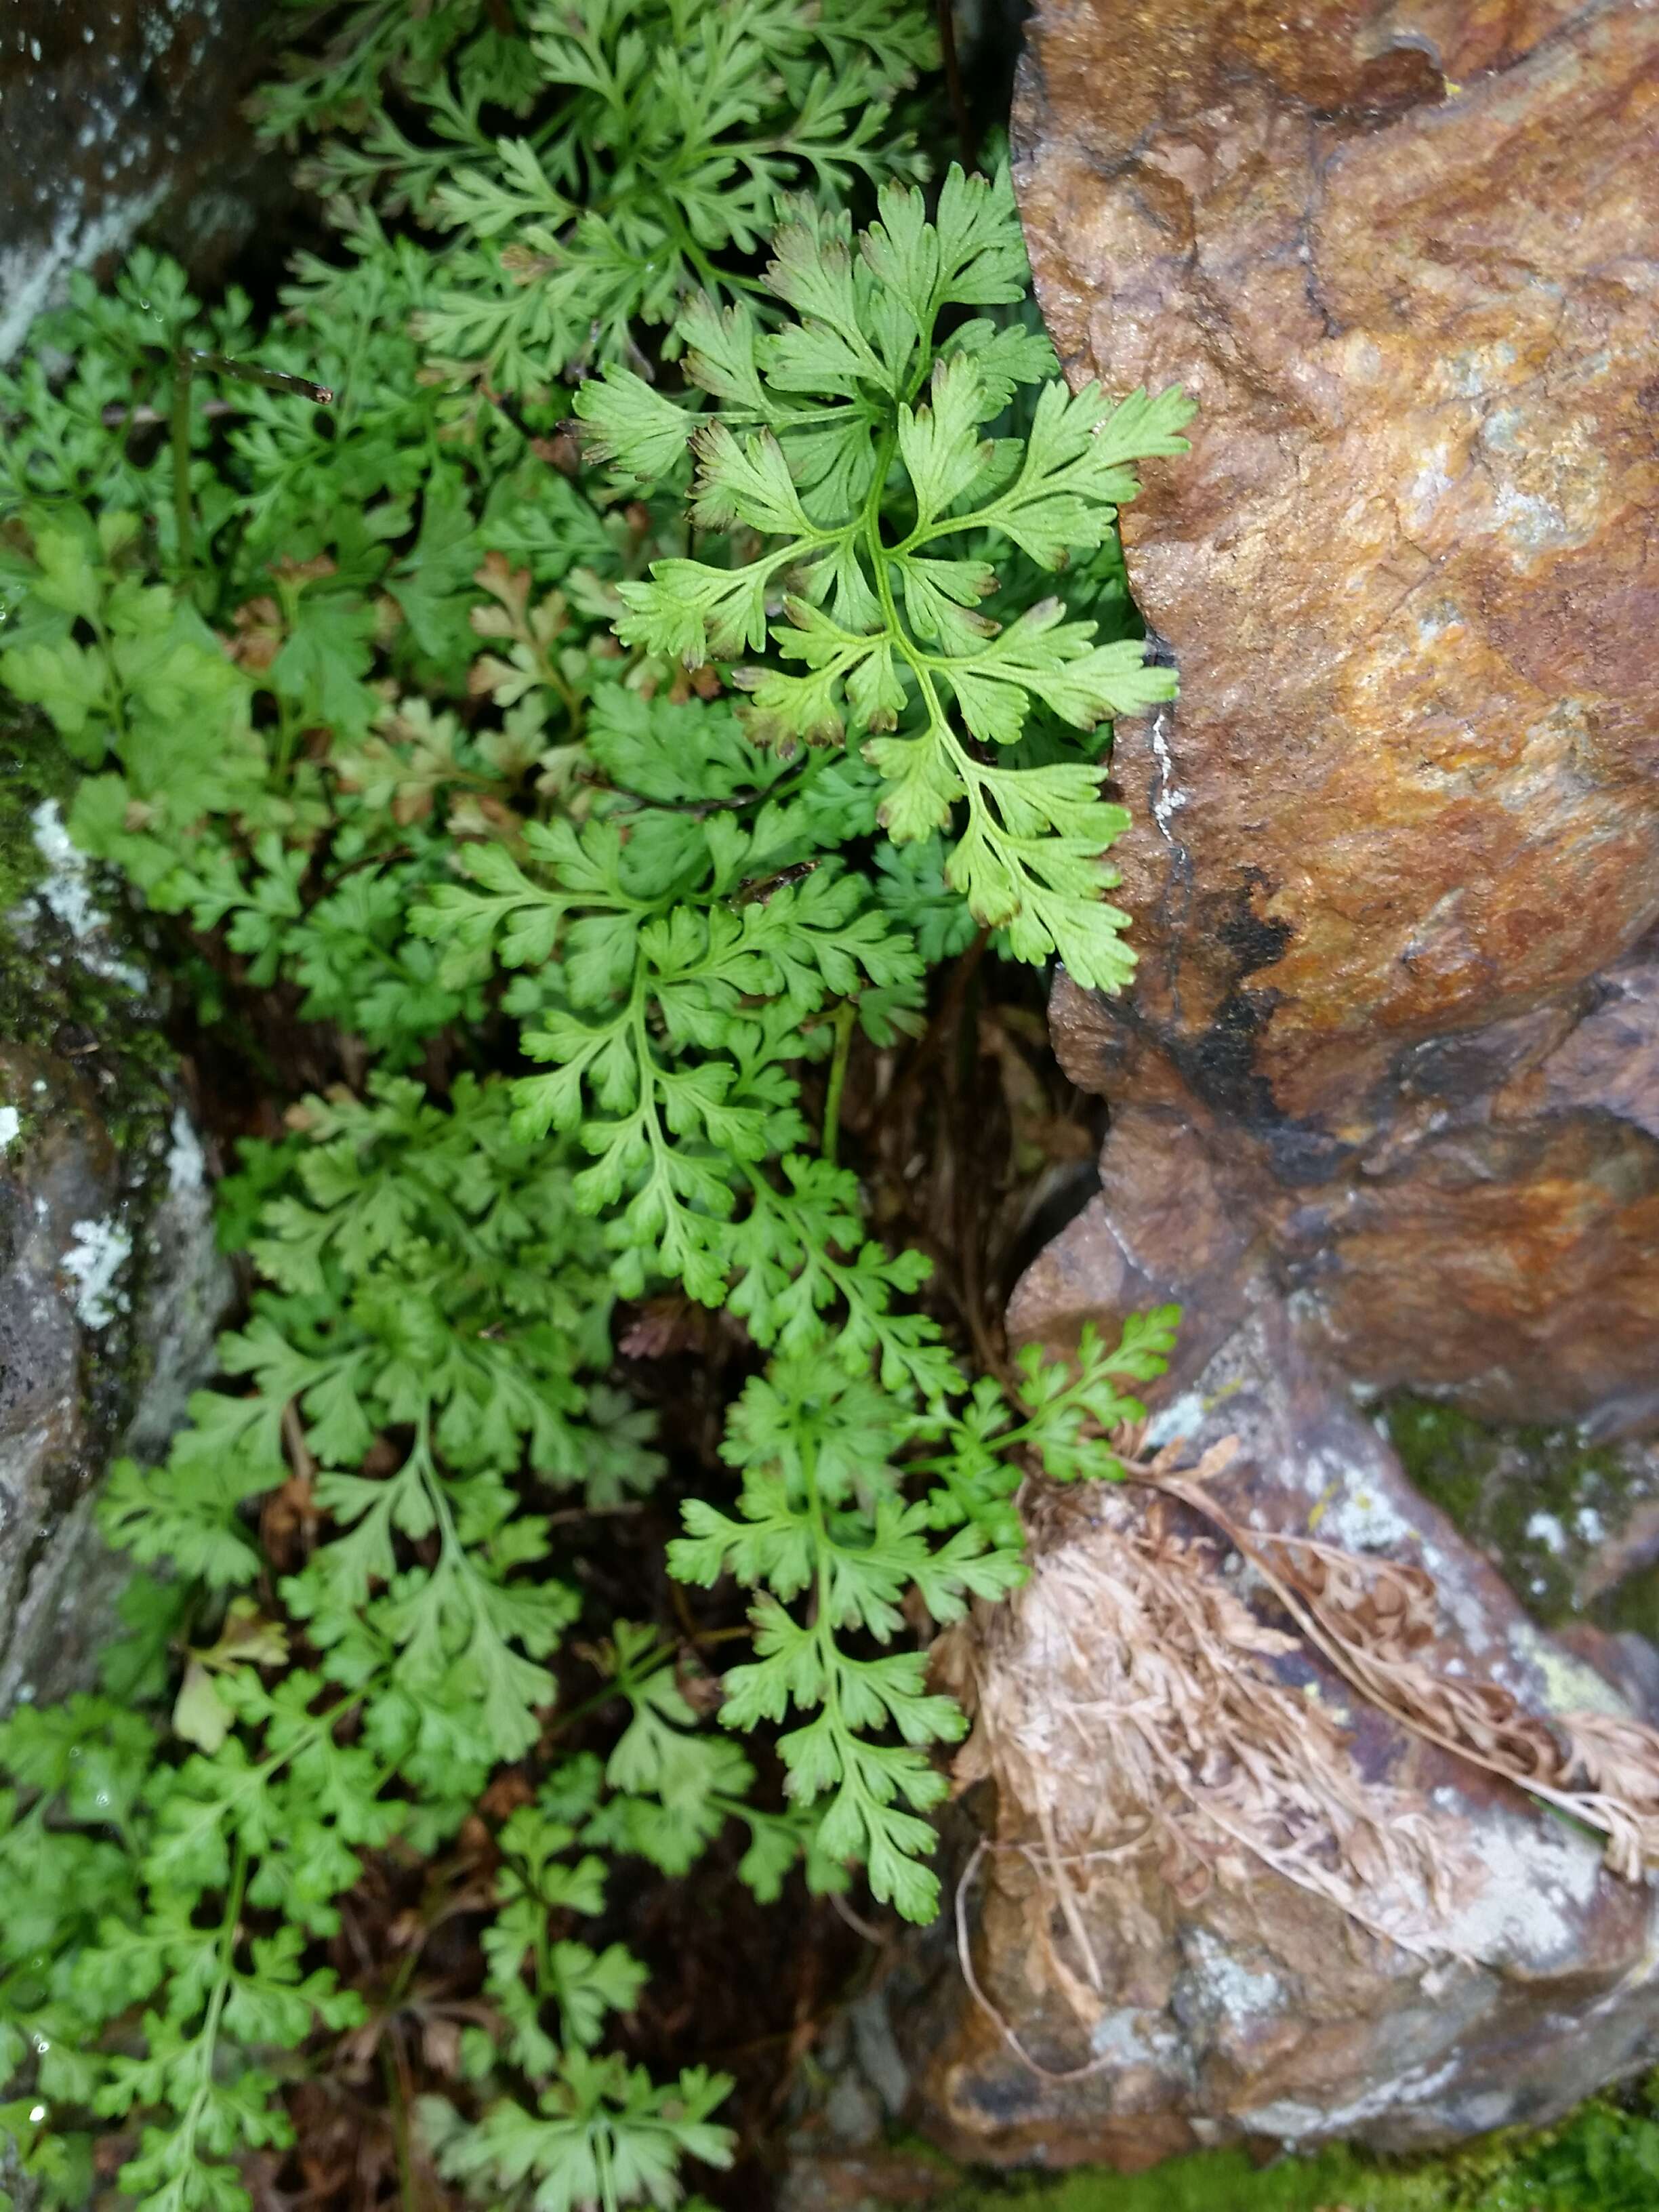 Image of parsley fern